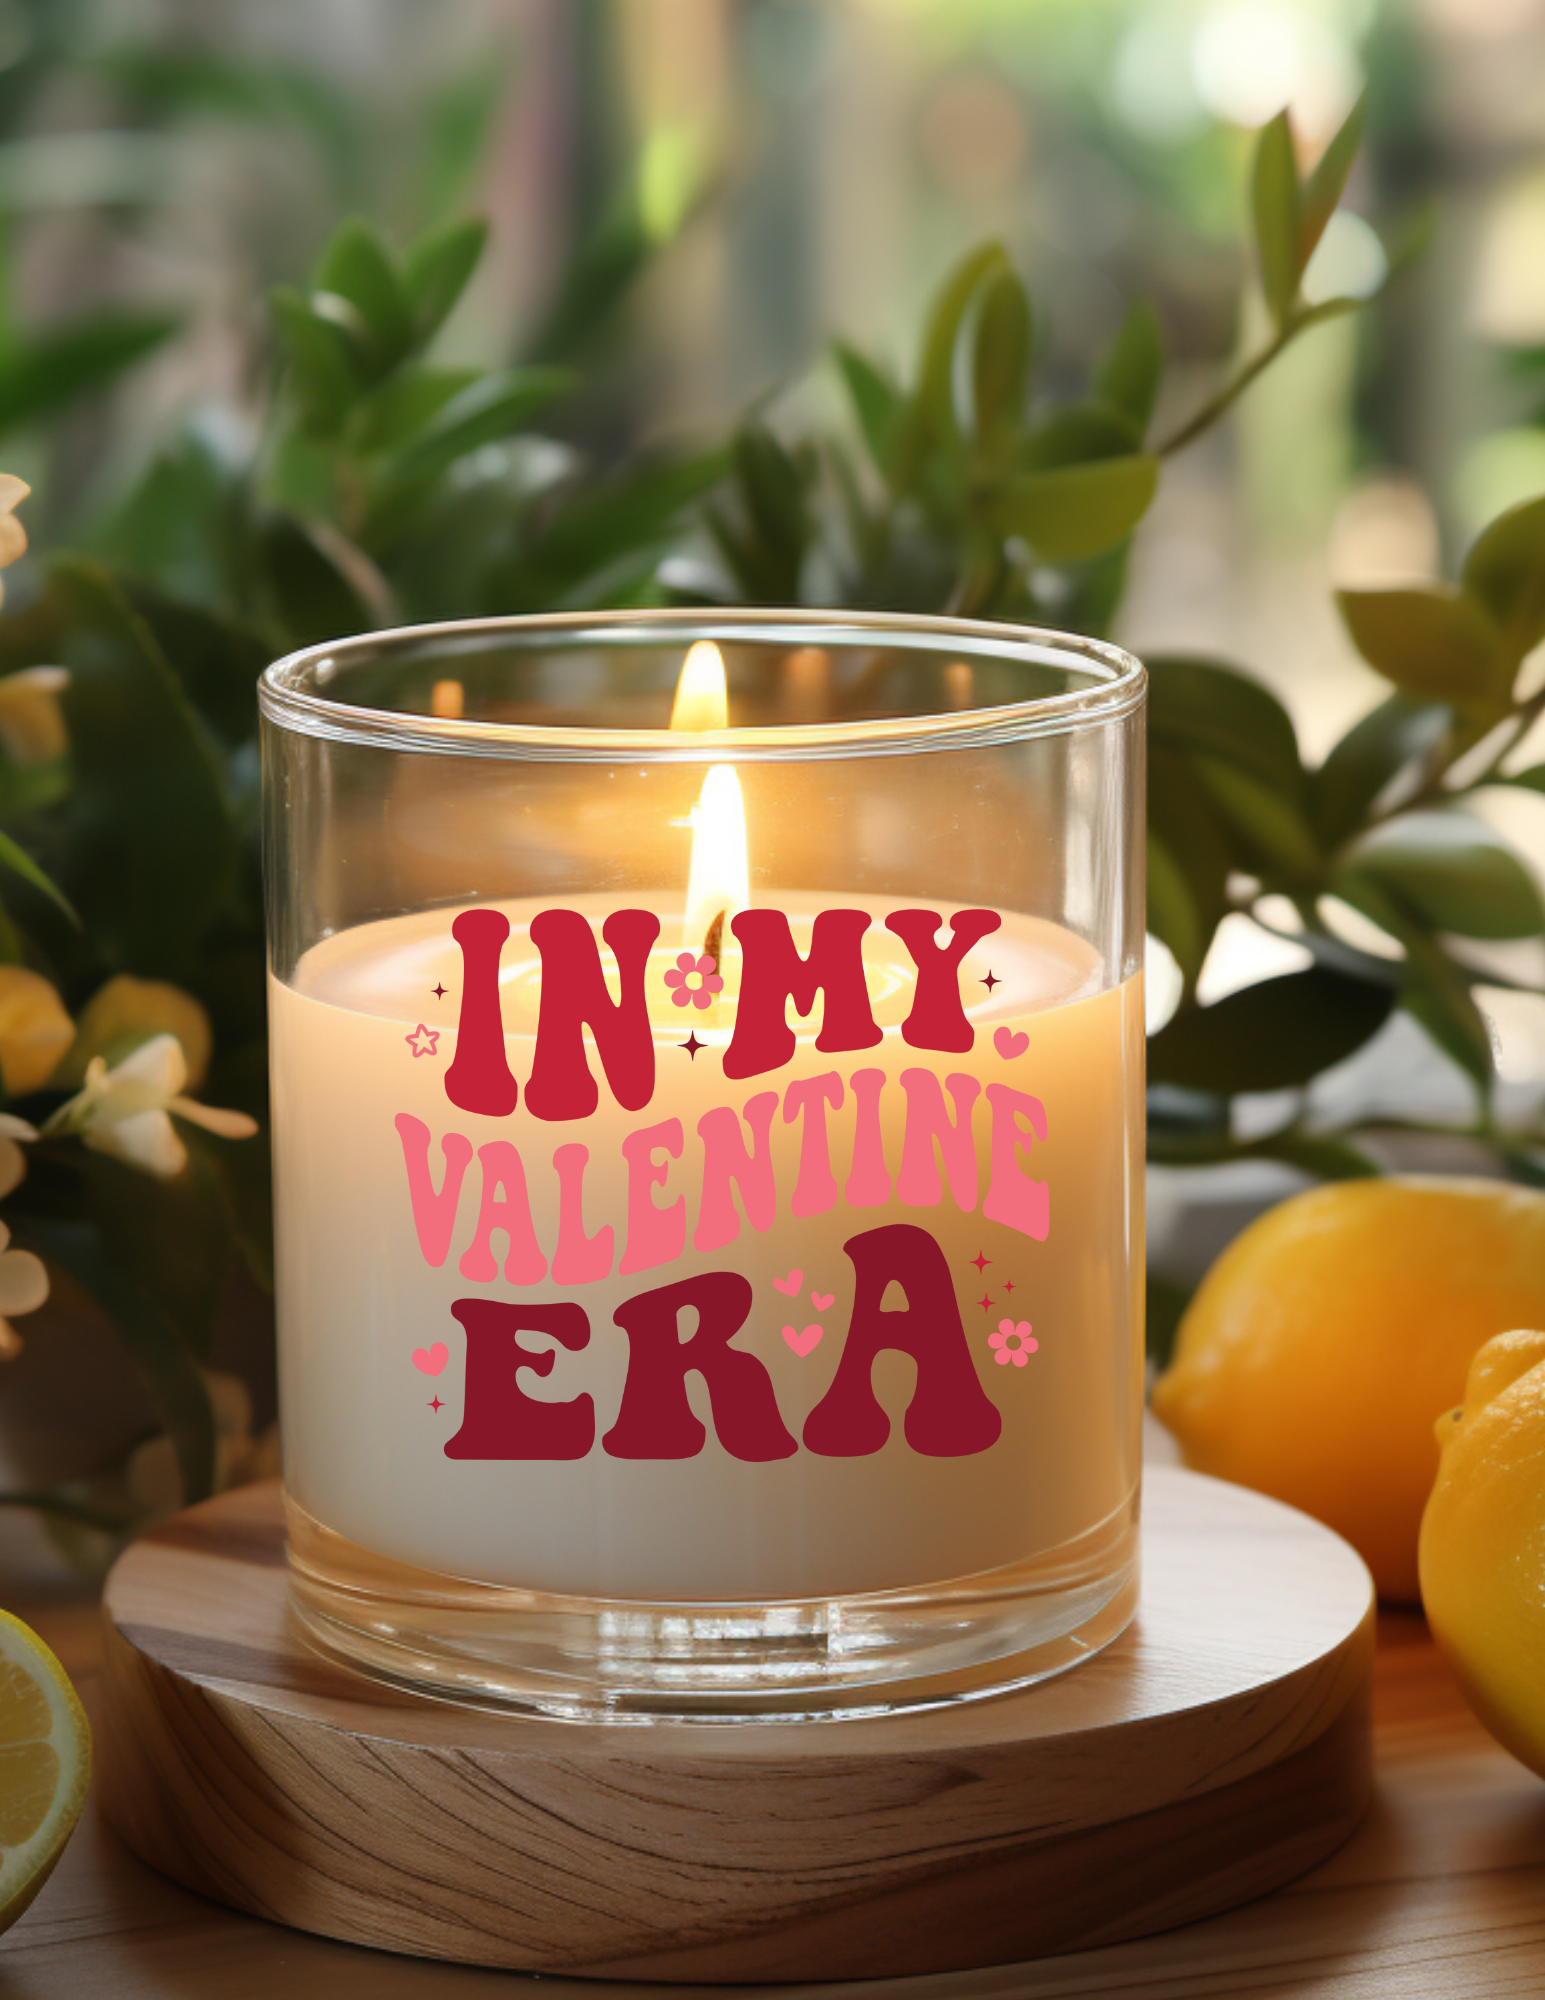 In My Valentine Era Candle